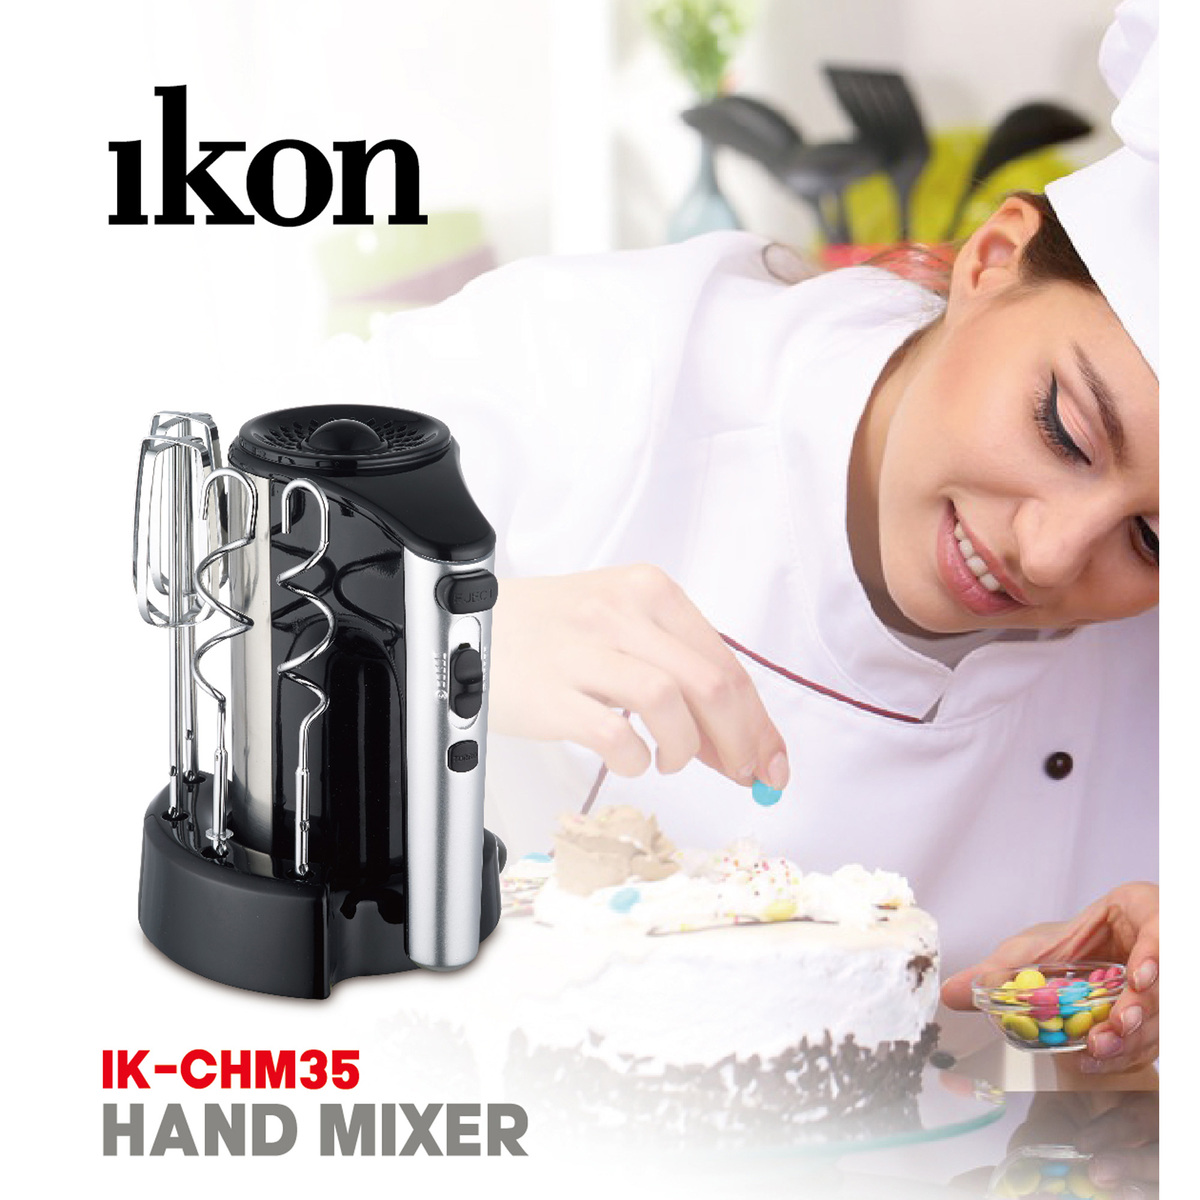 Ikon Hand Mixer, IK-CHM35